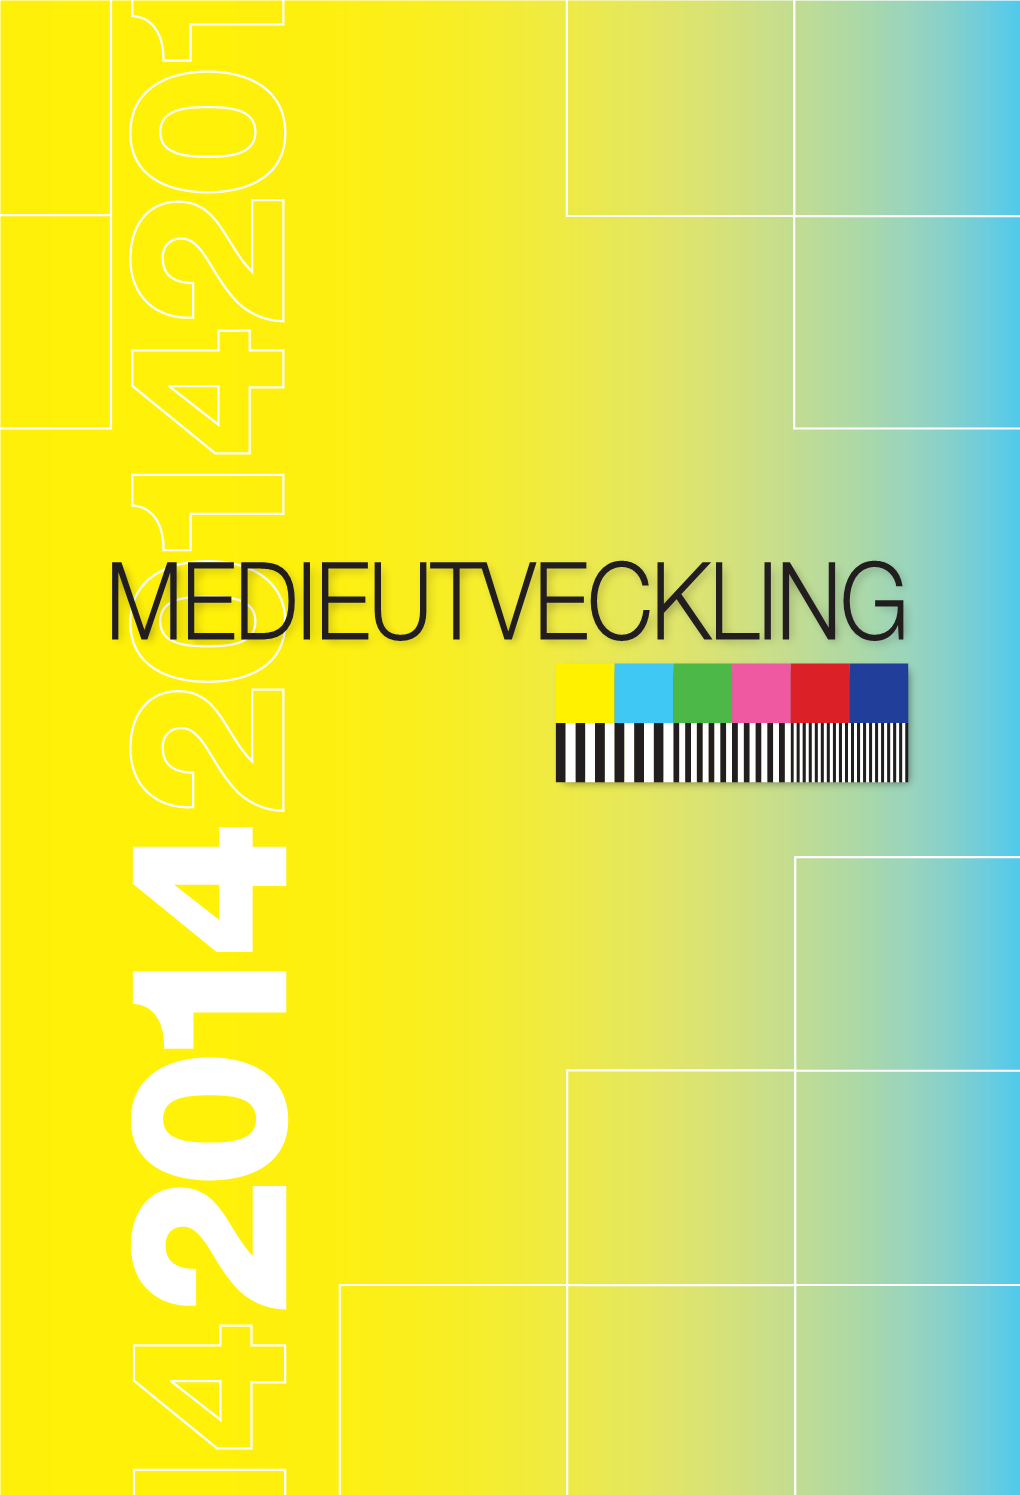 Medieutveckling 2014.Pdf